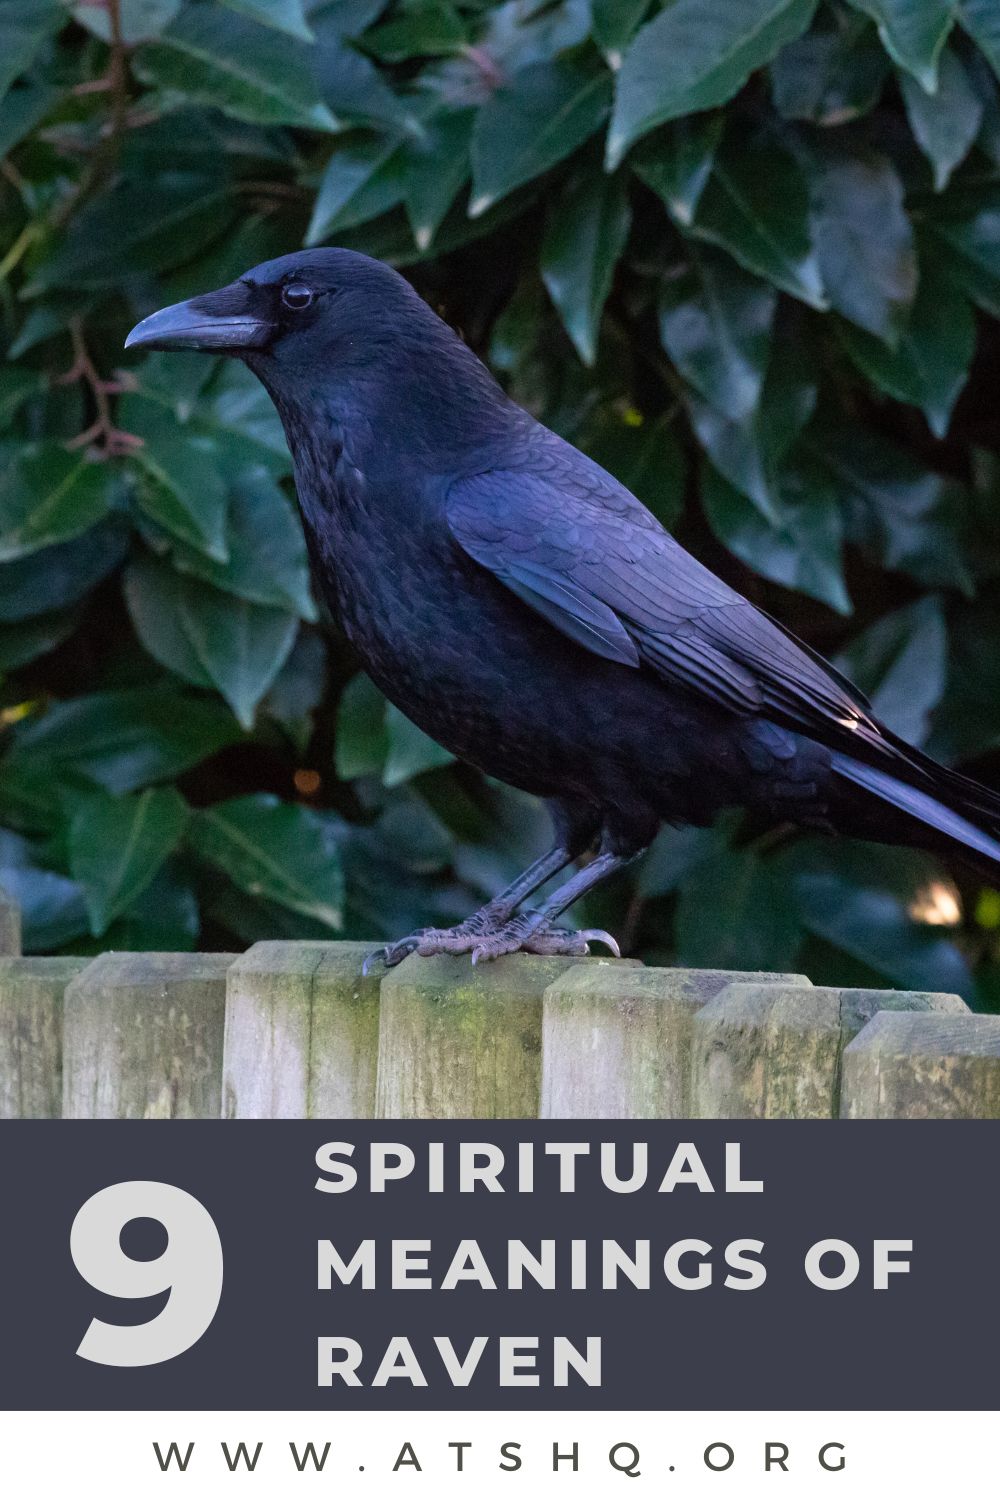 9 Spiritual Meanings of Raven